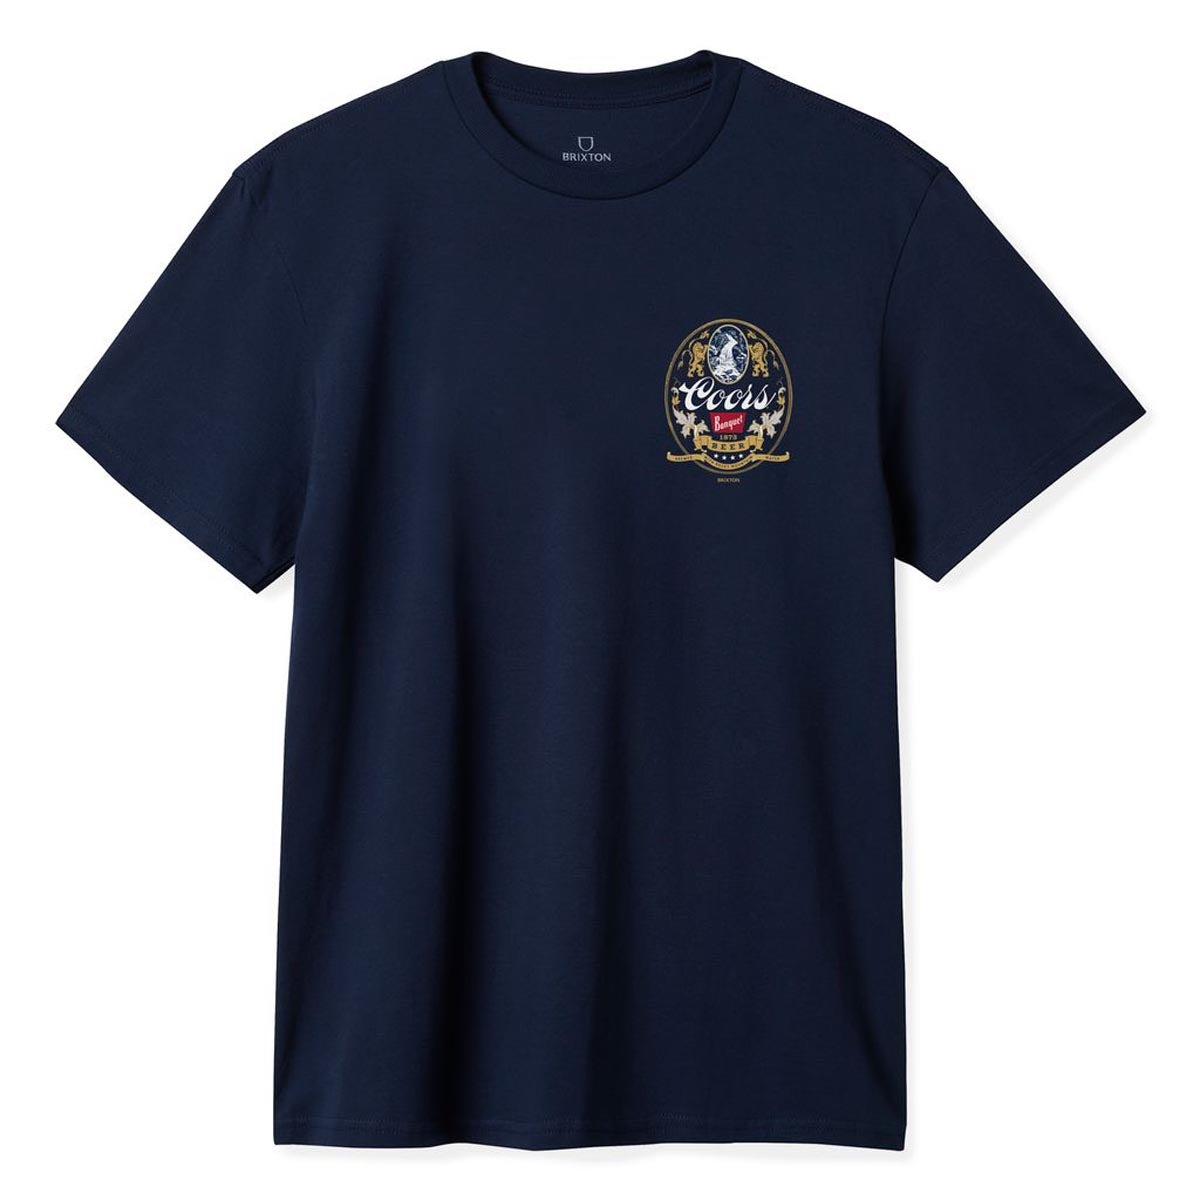 Brixton x Coors Mtn T-Shirt - Navy image 2